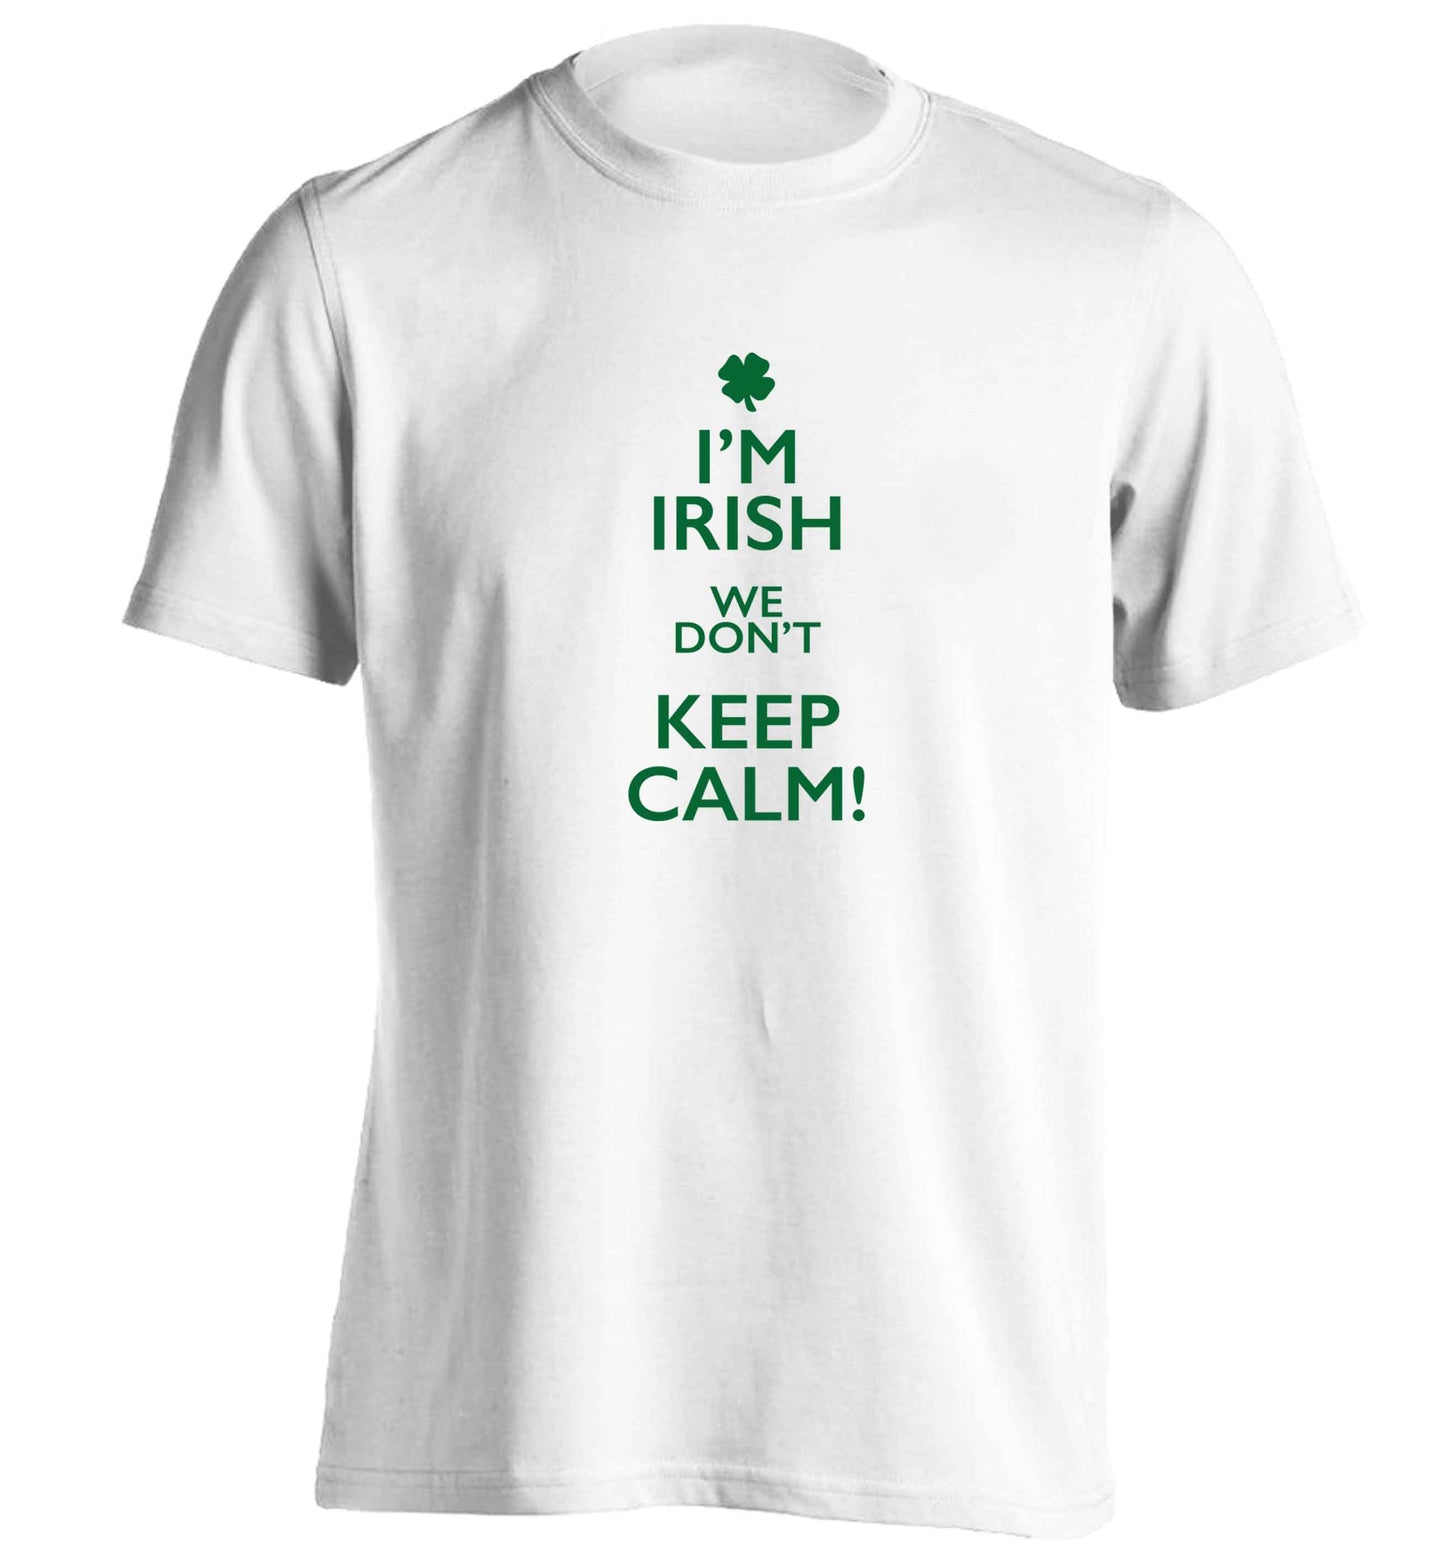 I'm Irish we don't keep calm adults unisex white Tshirt 2XL